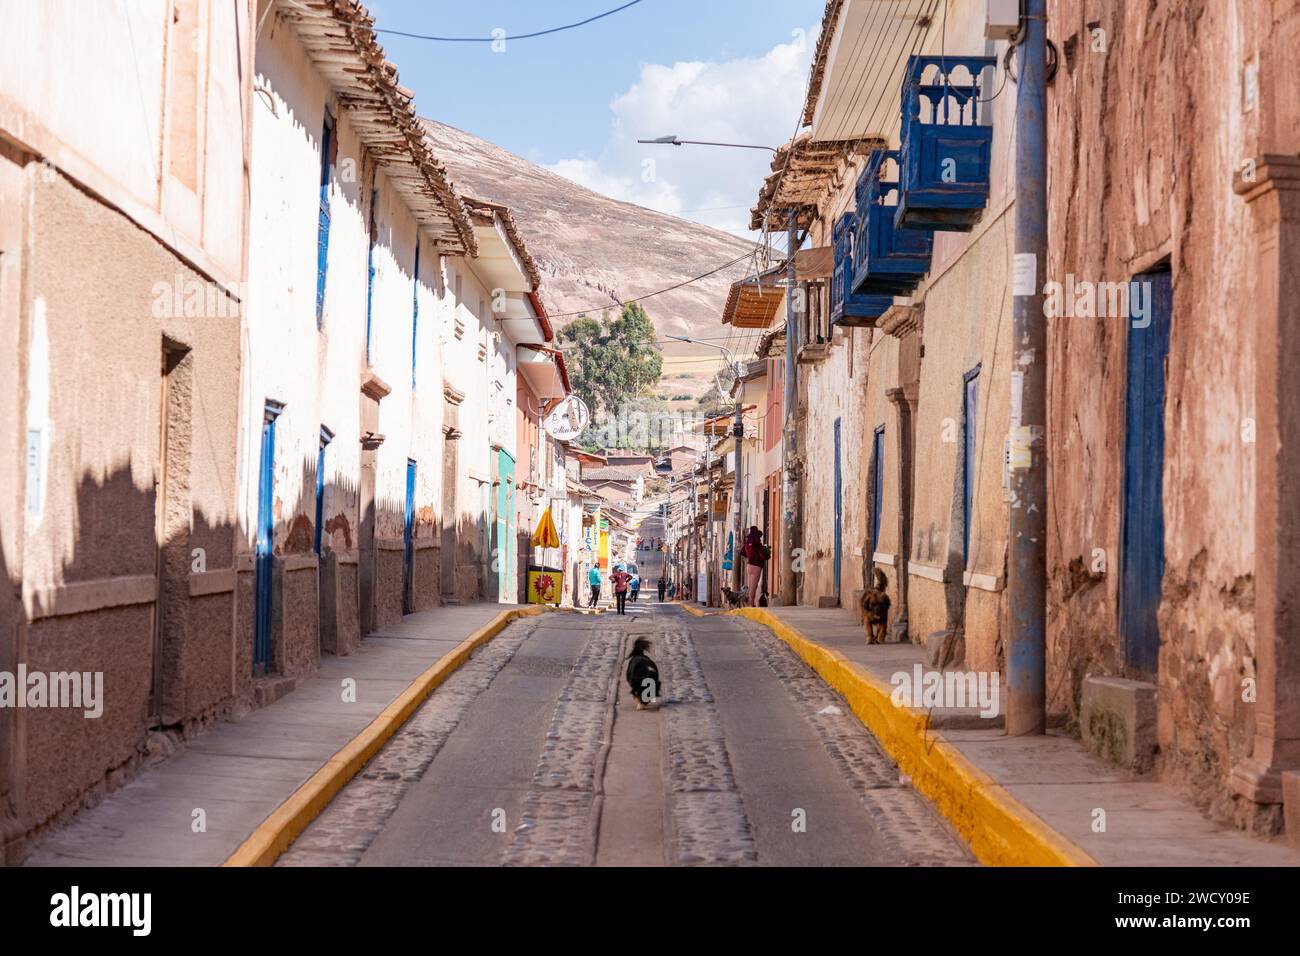 A street / road in Maras village in Peru Stock Photo